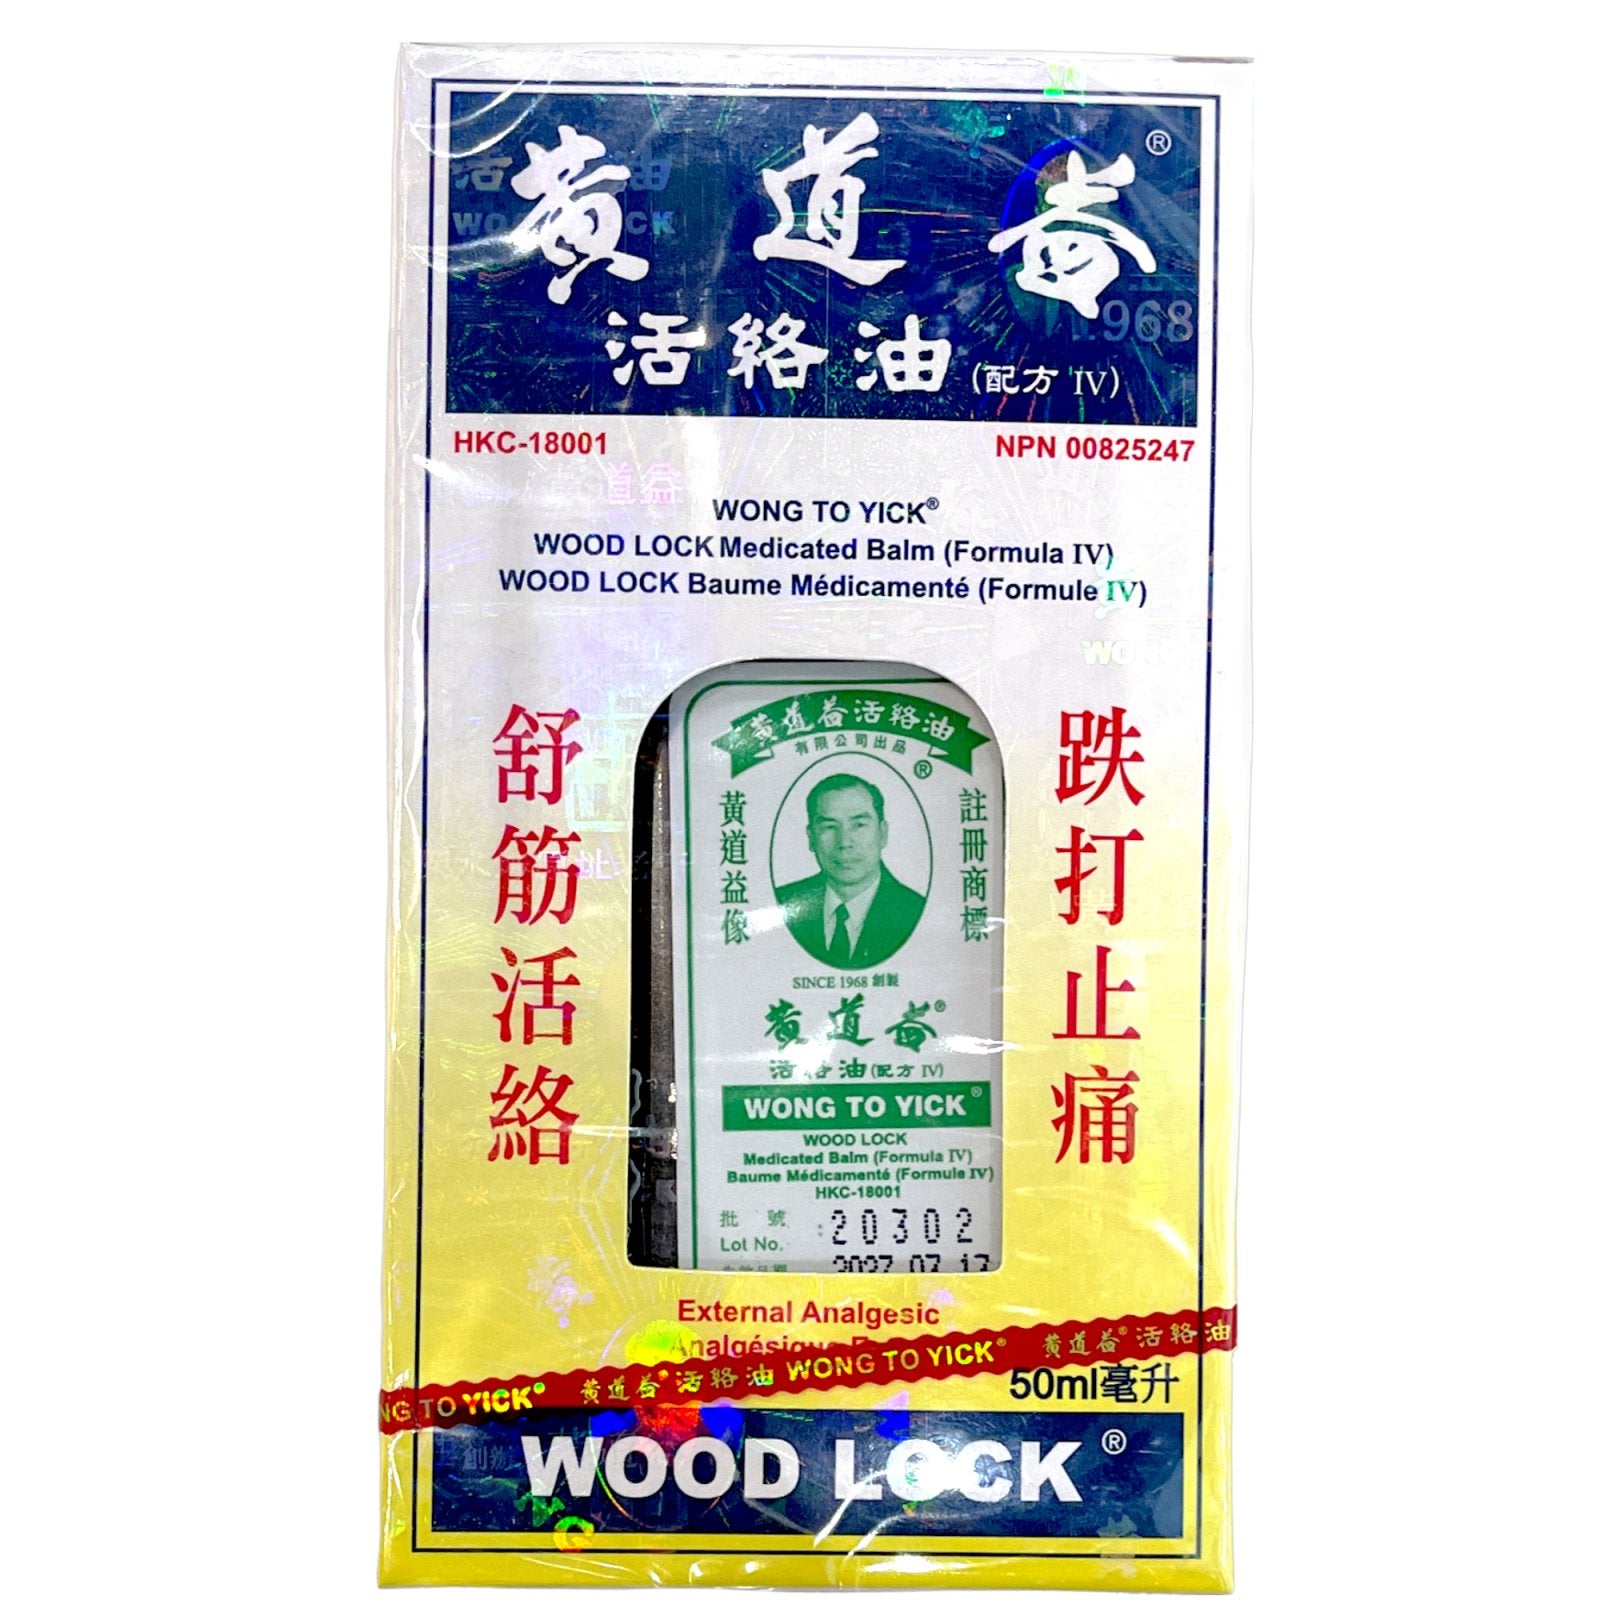 Wong To Yick - Wood Lock Oil (50mL)